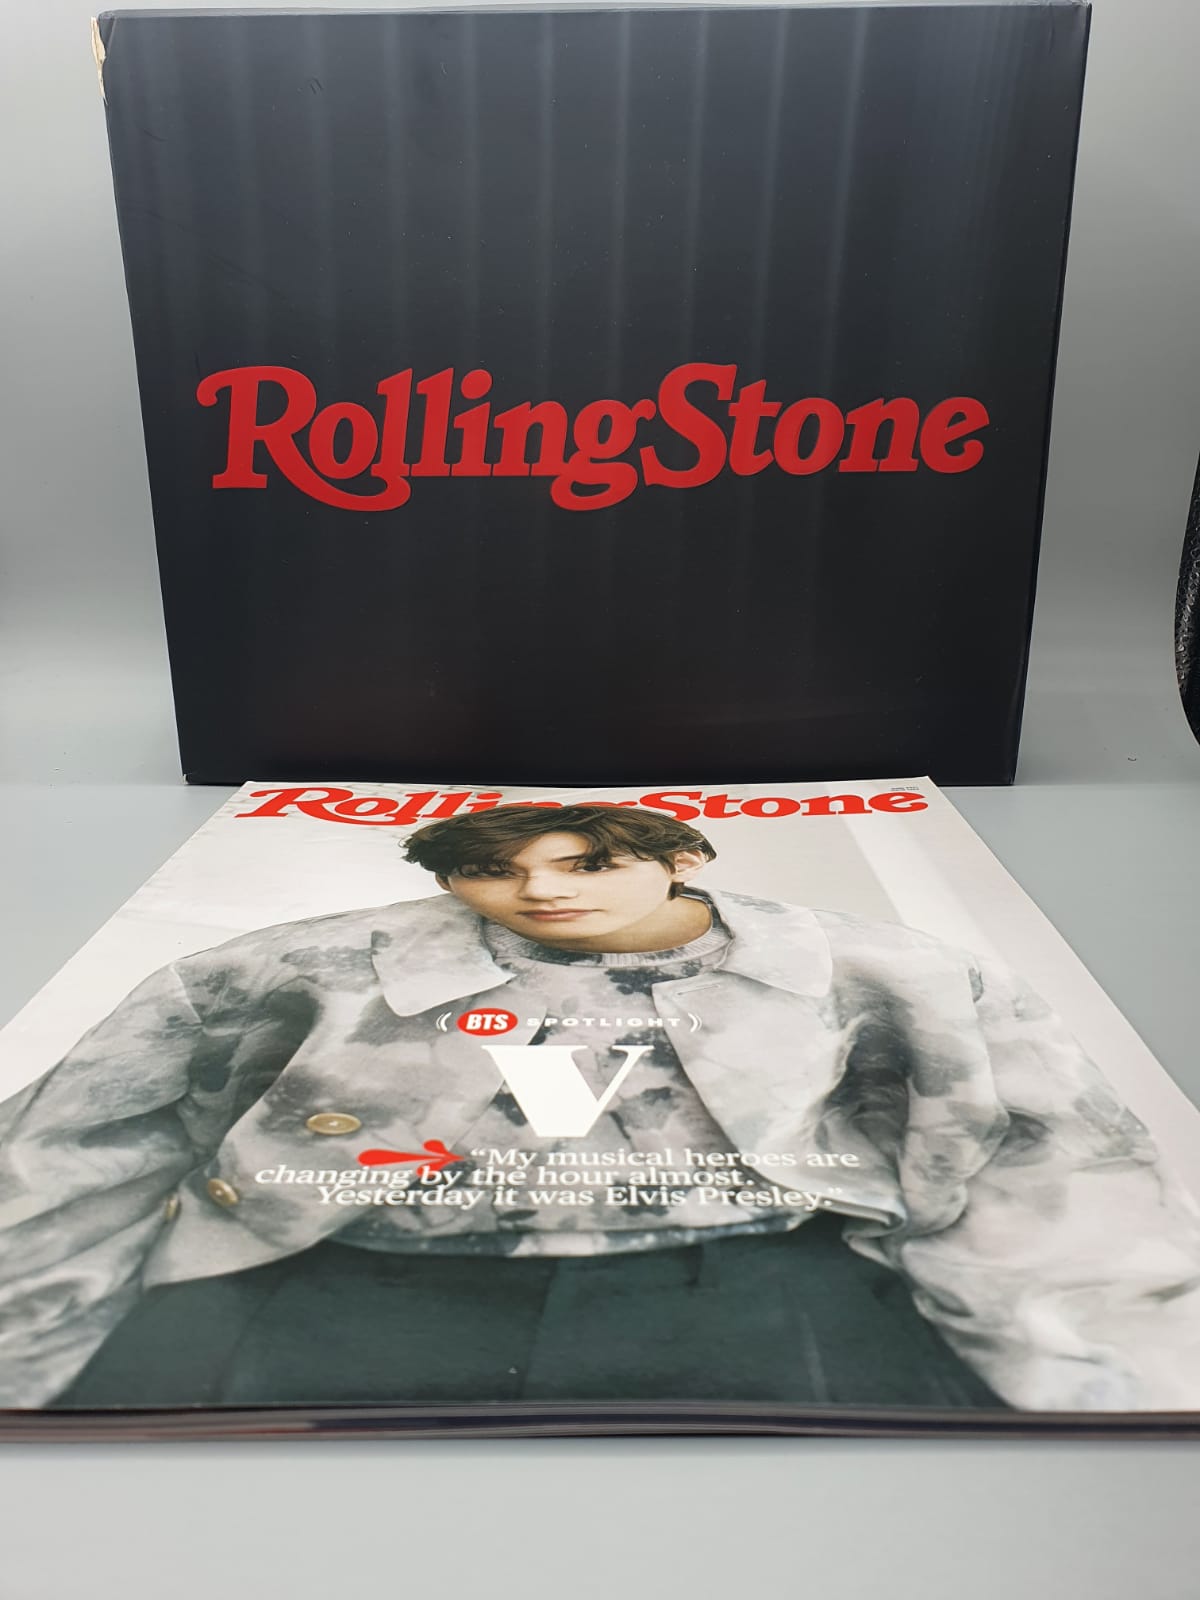 Set BTS Magazines Cover Edition Collectors Box BTS Art Rolling Stone Agency Ltd – 8pcs Korean